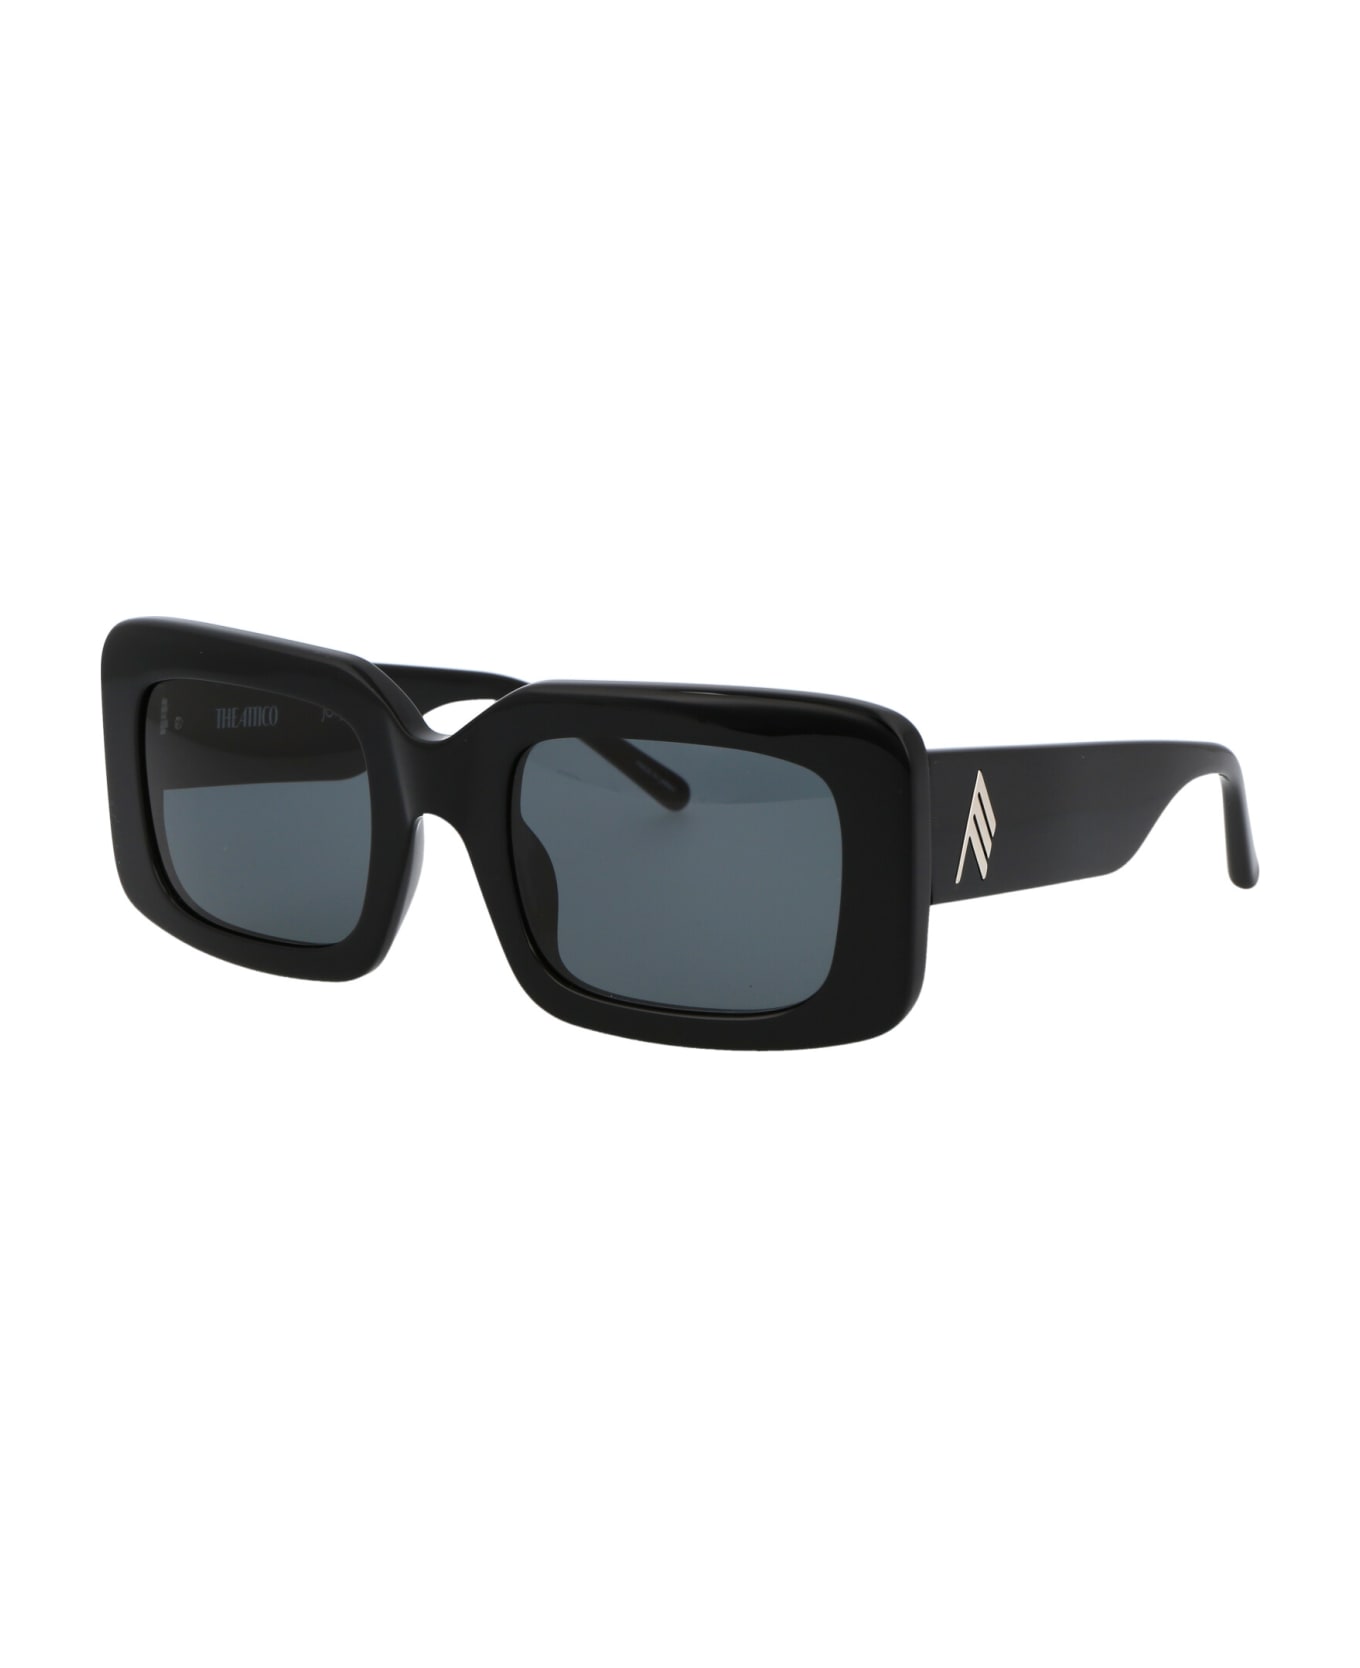 The Attico Jorja Sunglasses - BLACK/SILVER/GREY サングラス